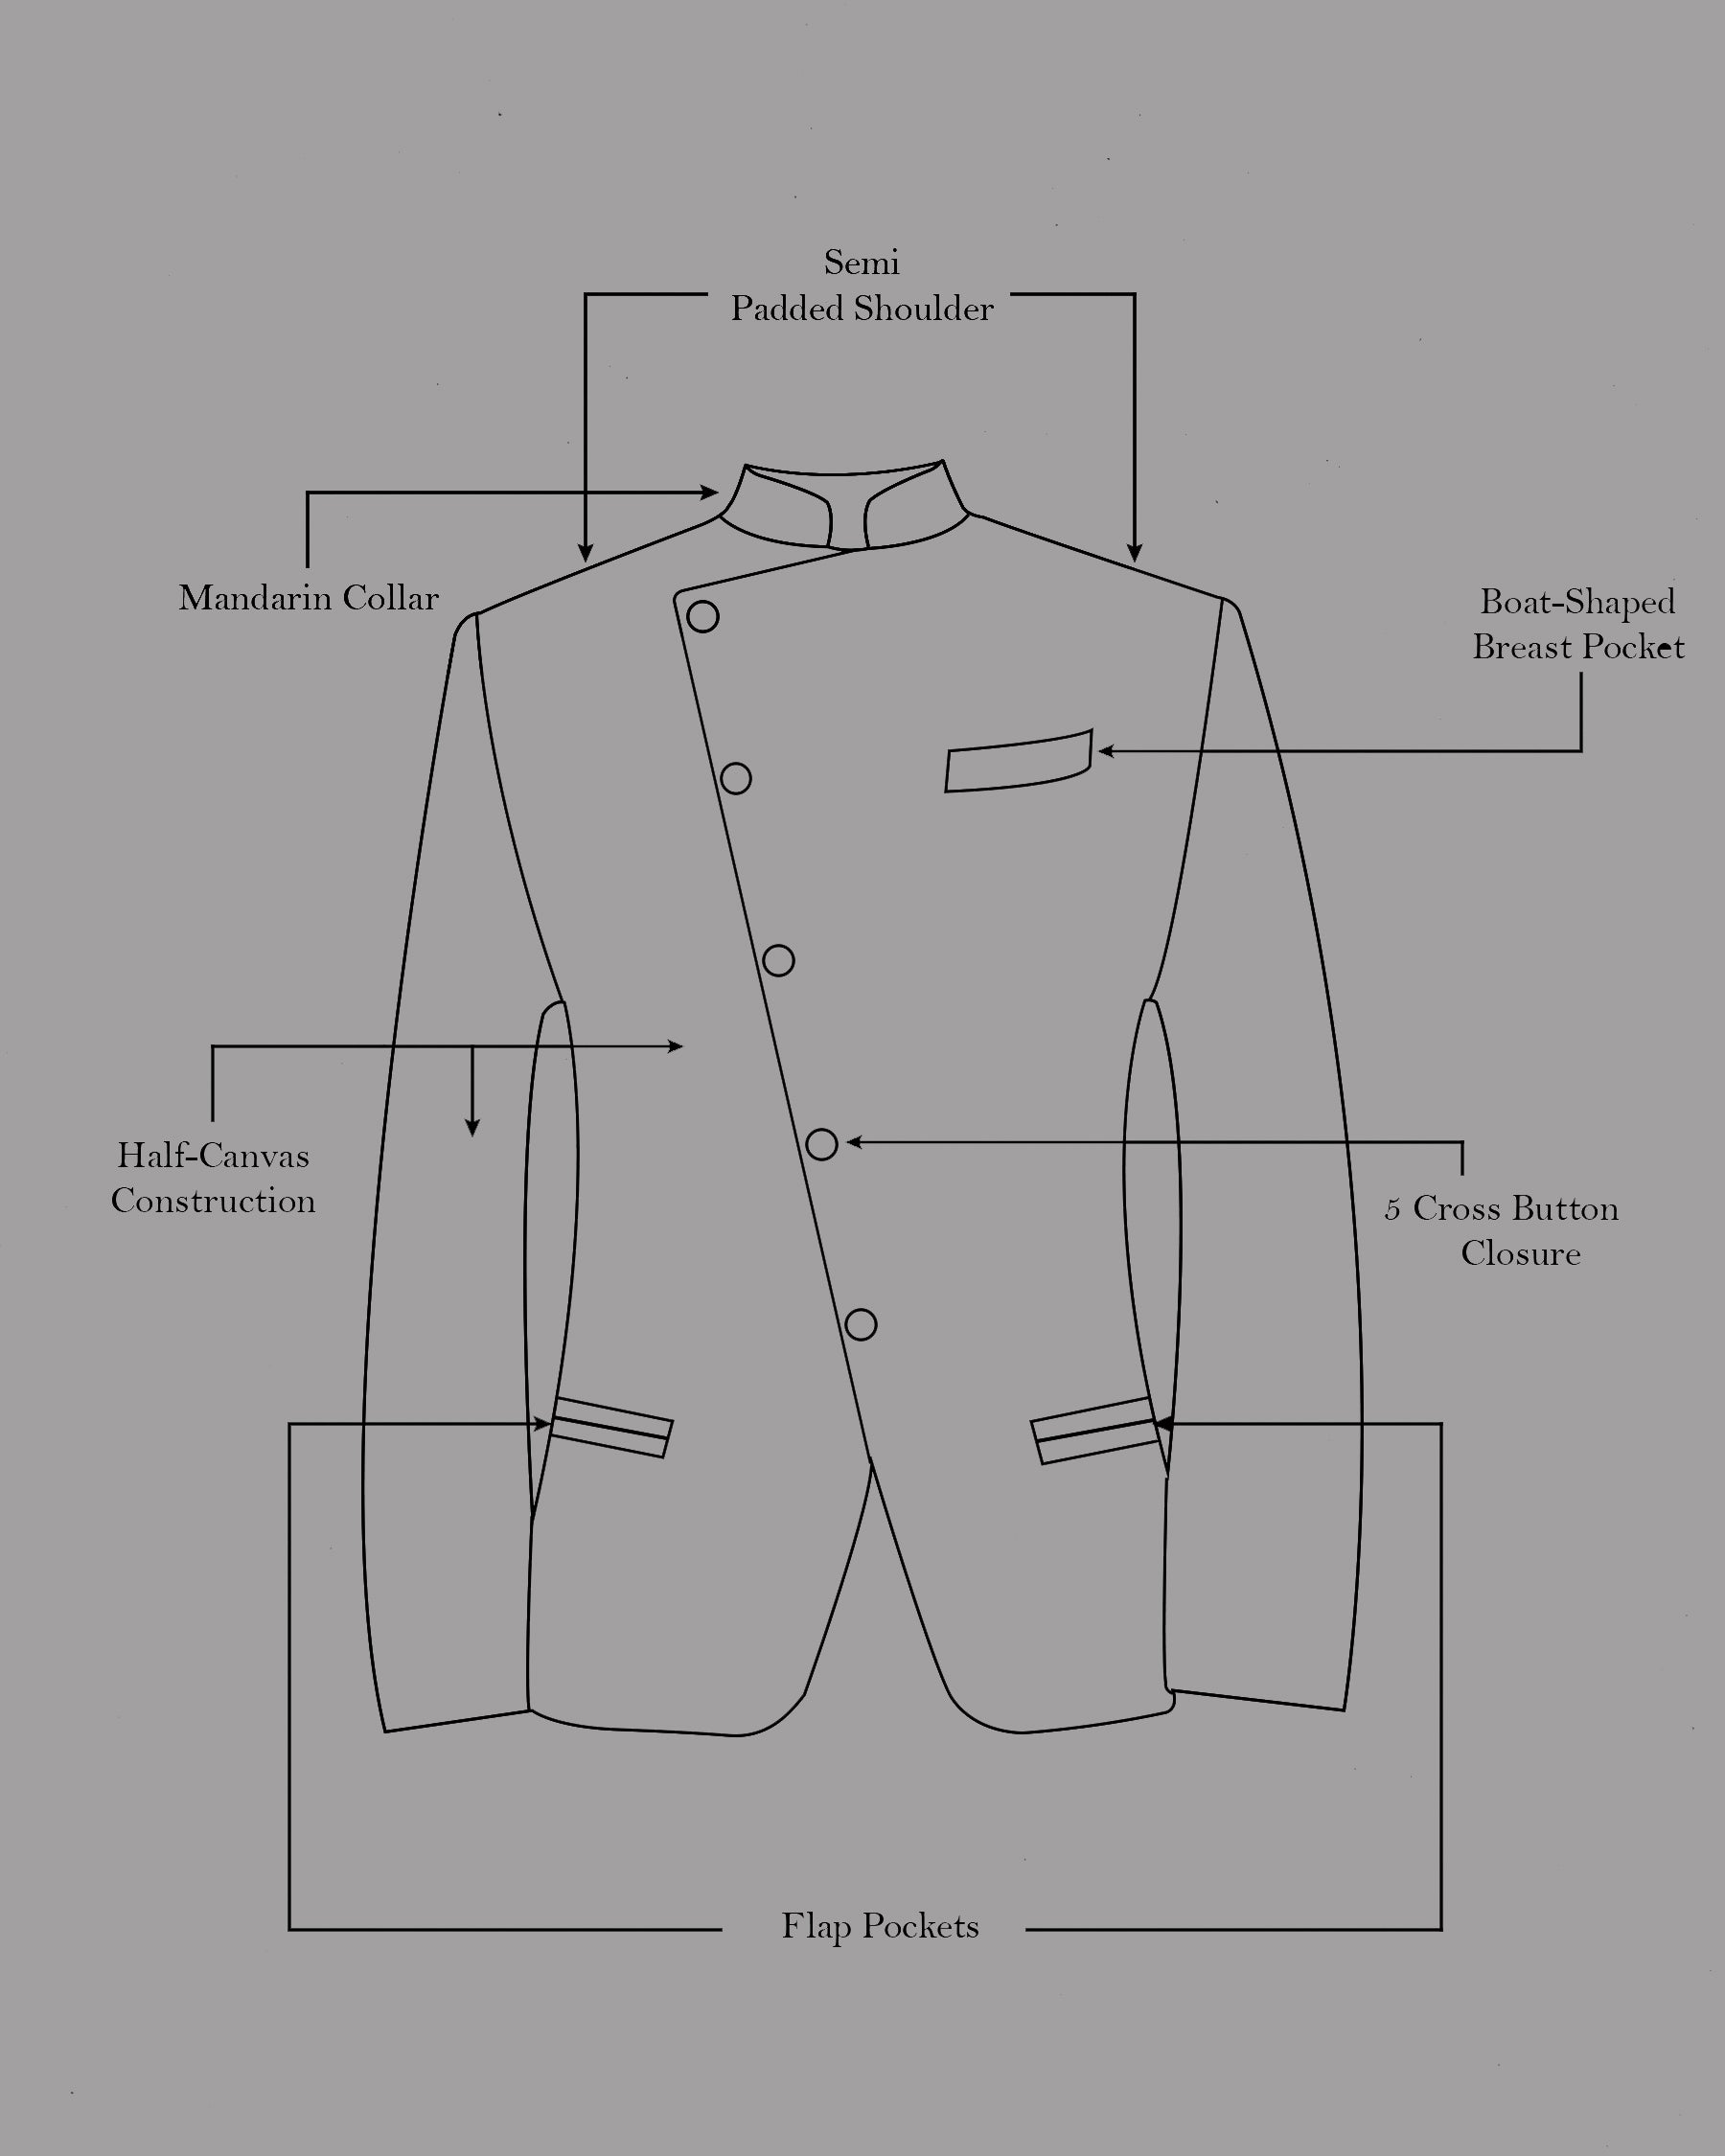 Mine Shaft Black Plaid Cross Placket Bandhgala Wool Rich Suit